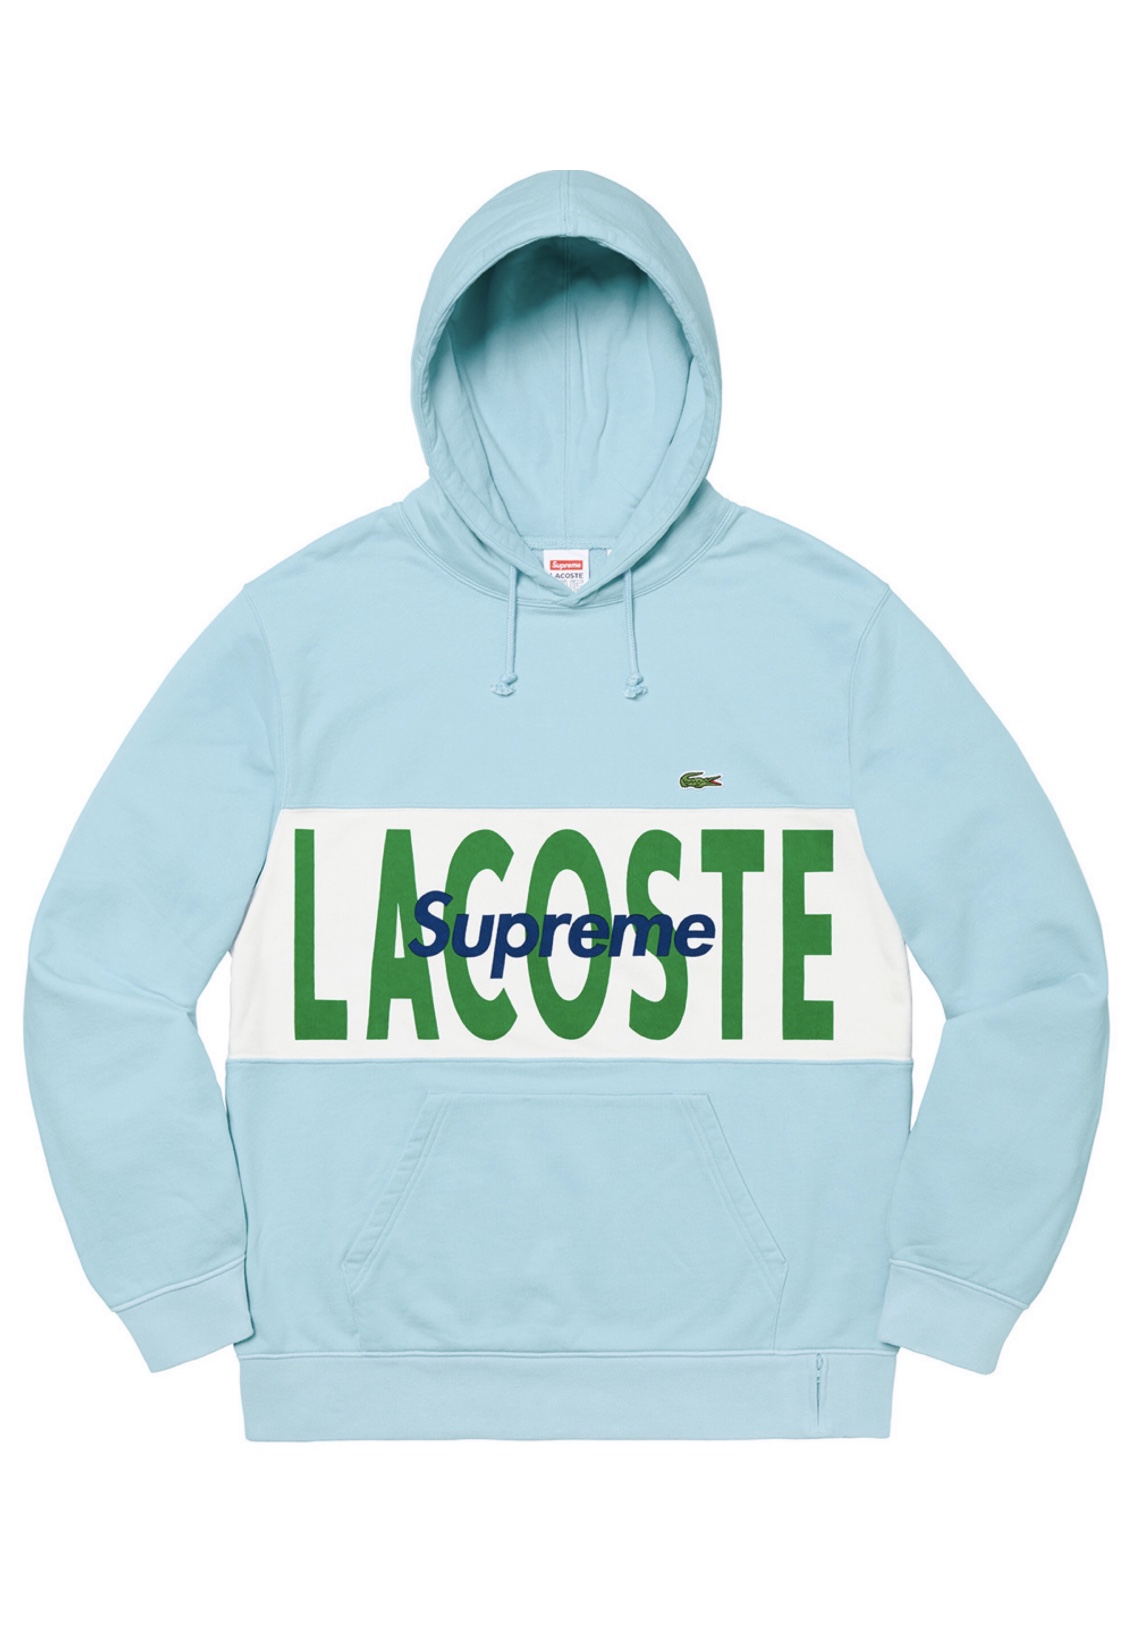 Supreme®/LACOSTE Logo Panel Hooded Sweatshirt - Light Blue